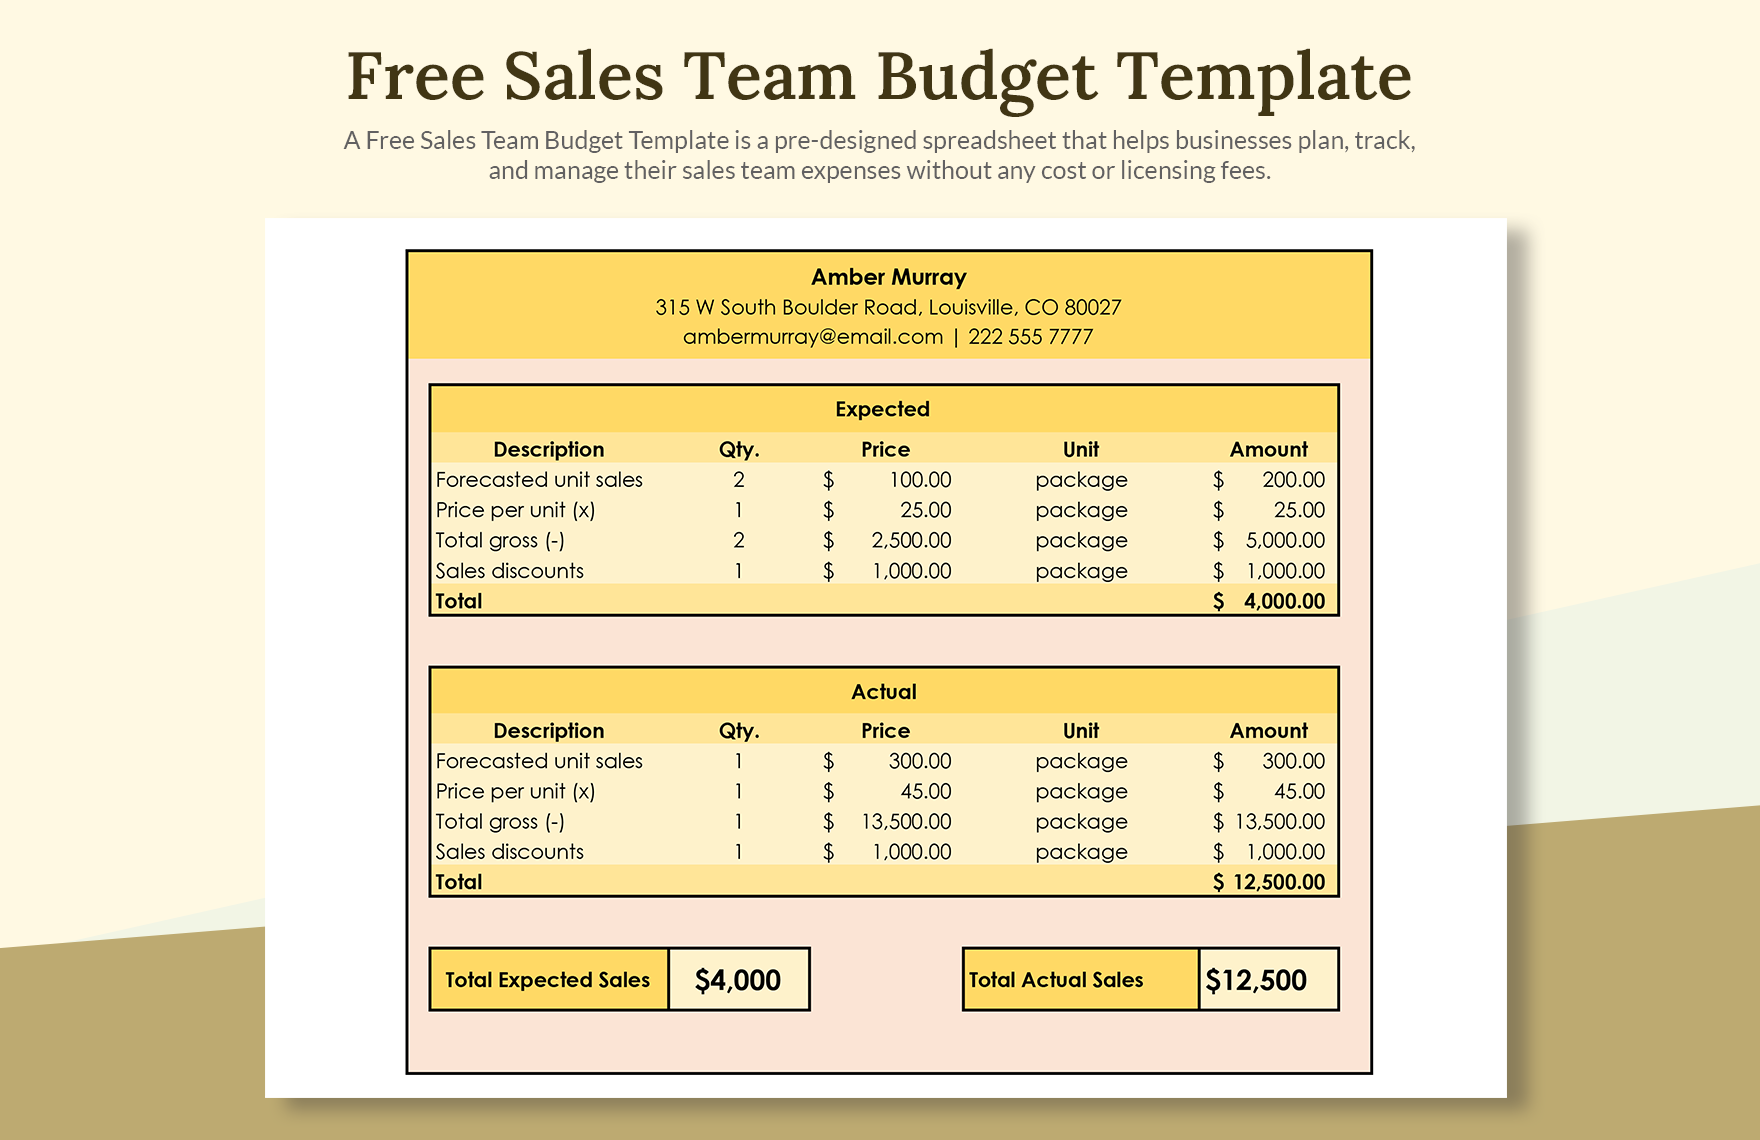 Sales Team Budget Template